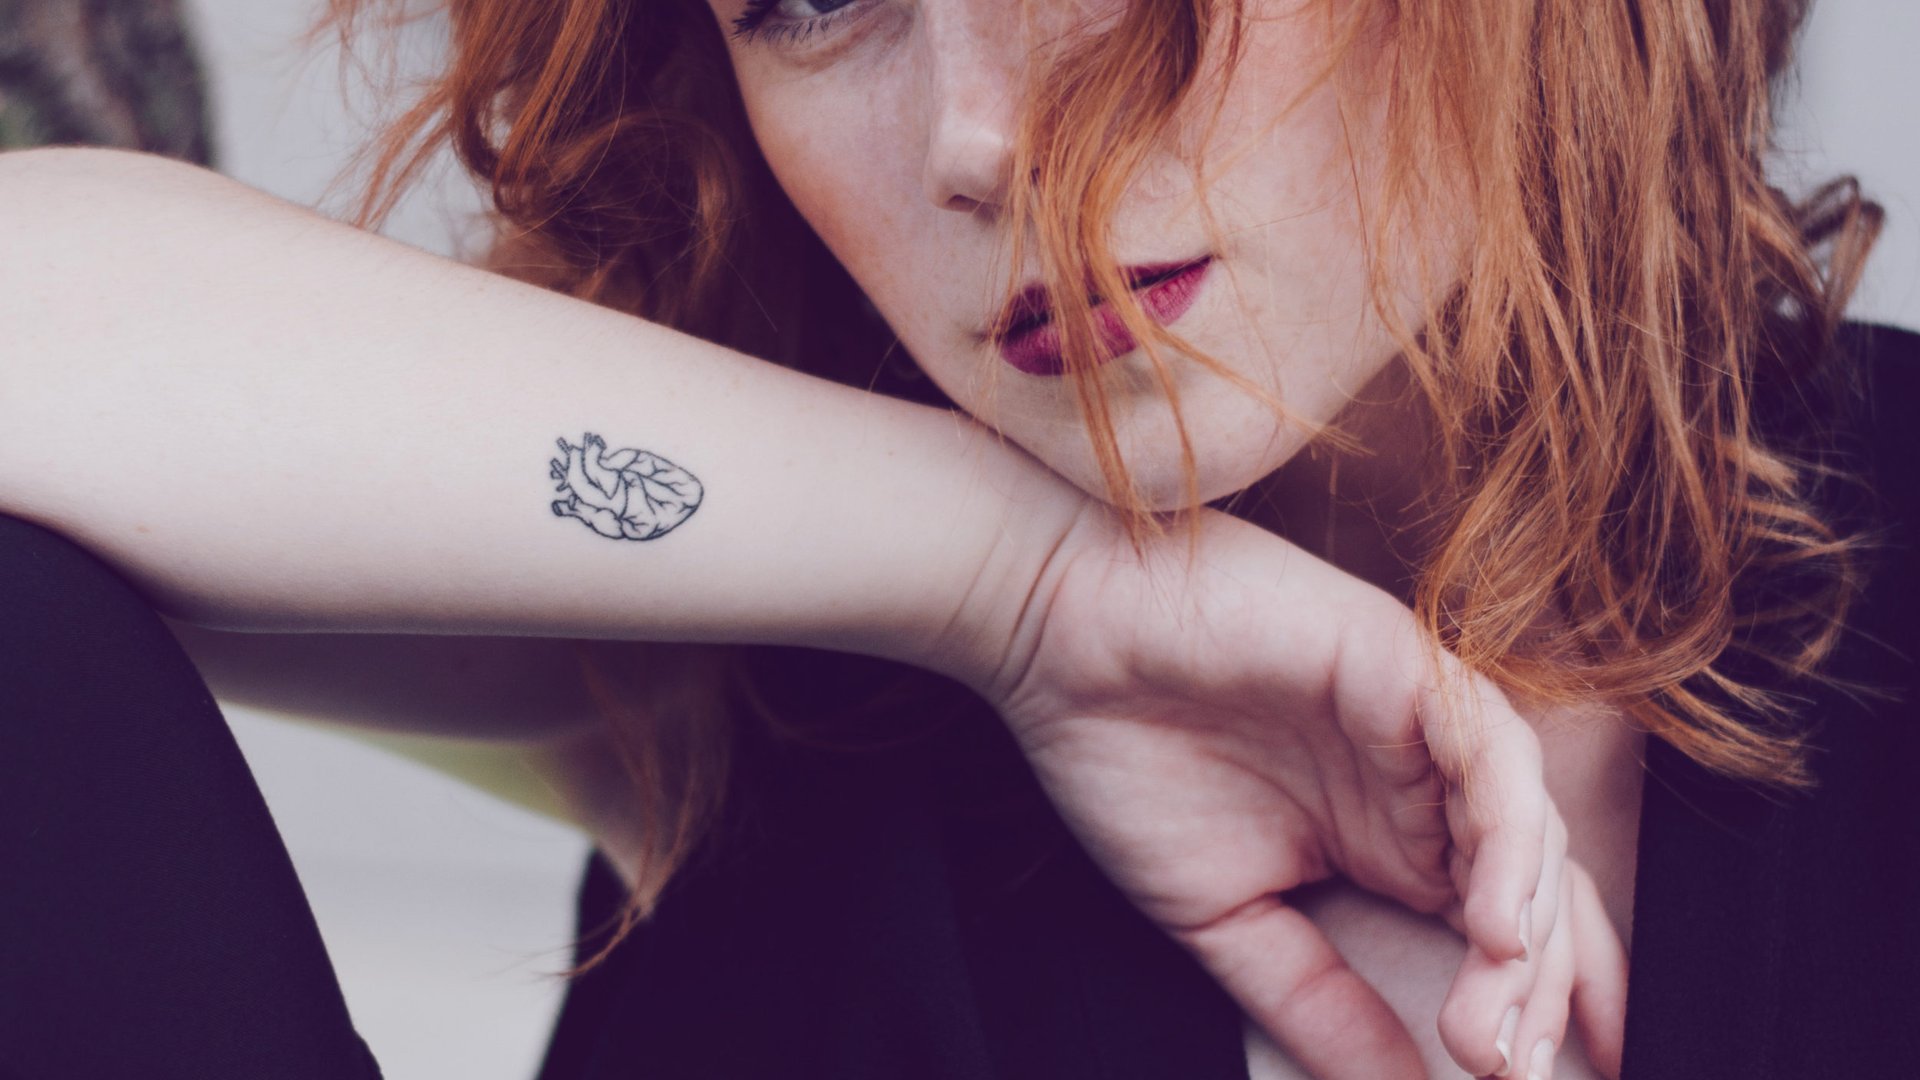 Frauen tattoo arm